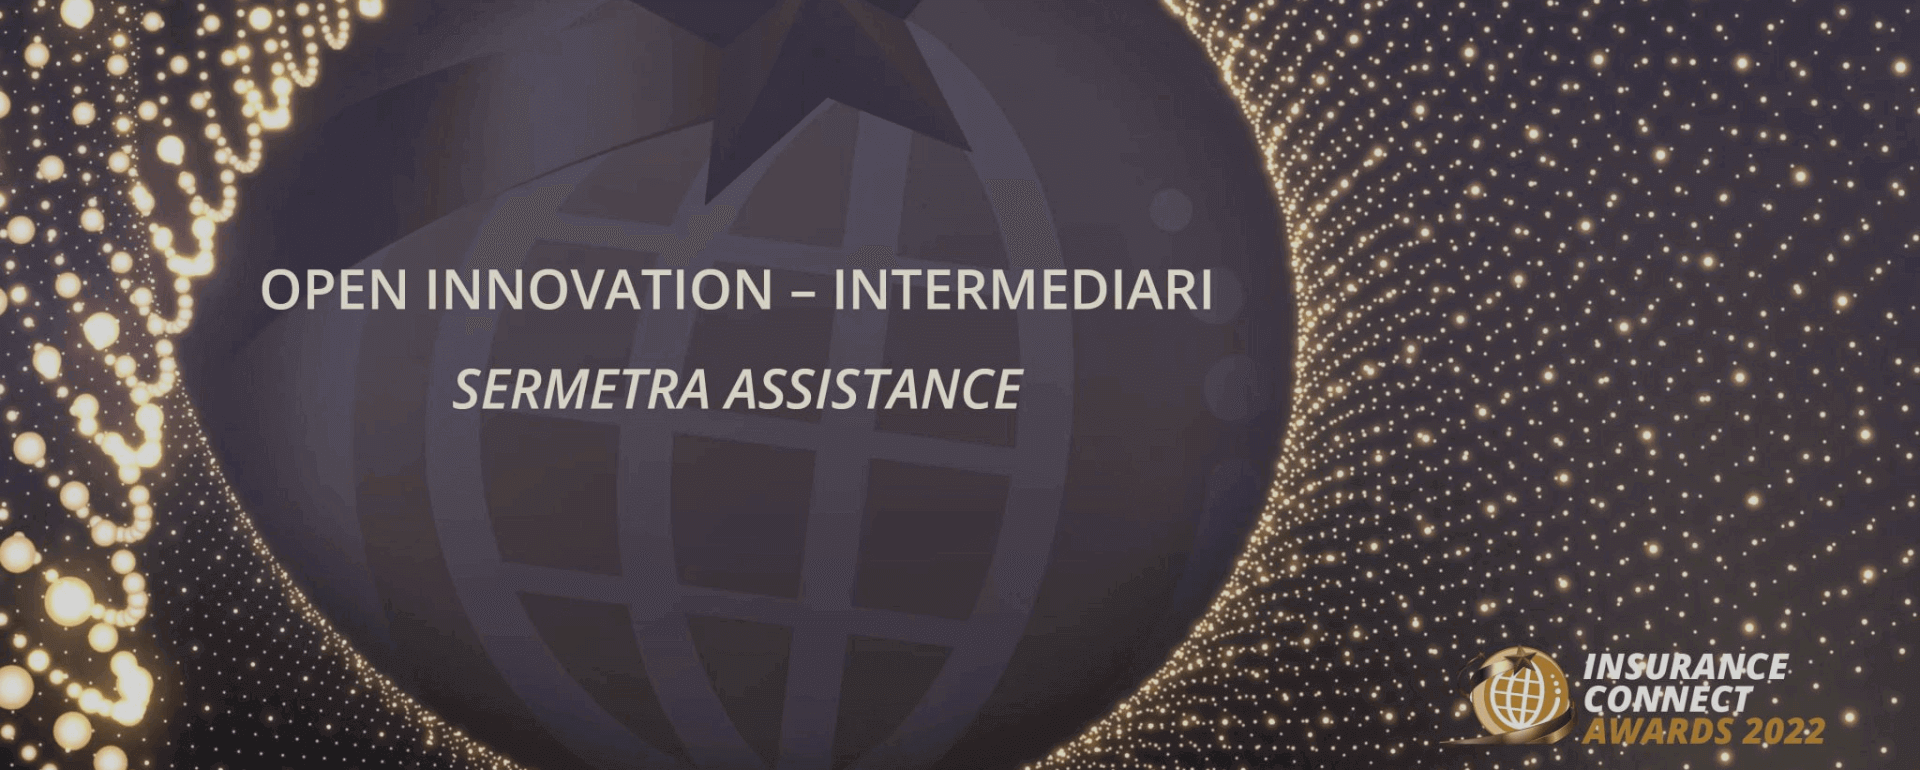 Sermetra Assistance all’Insurance Connect Award 2022